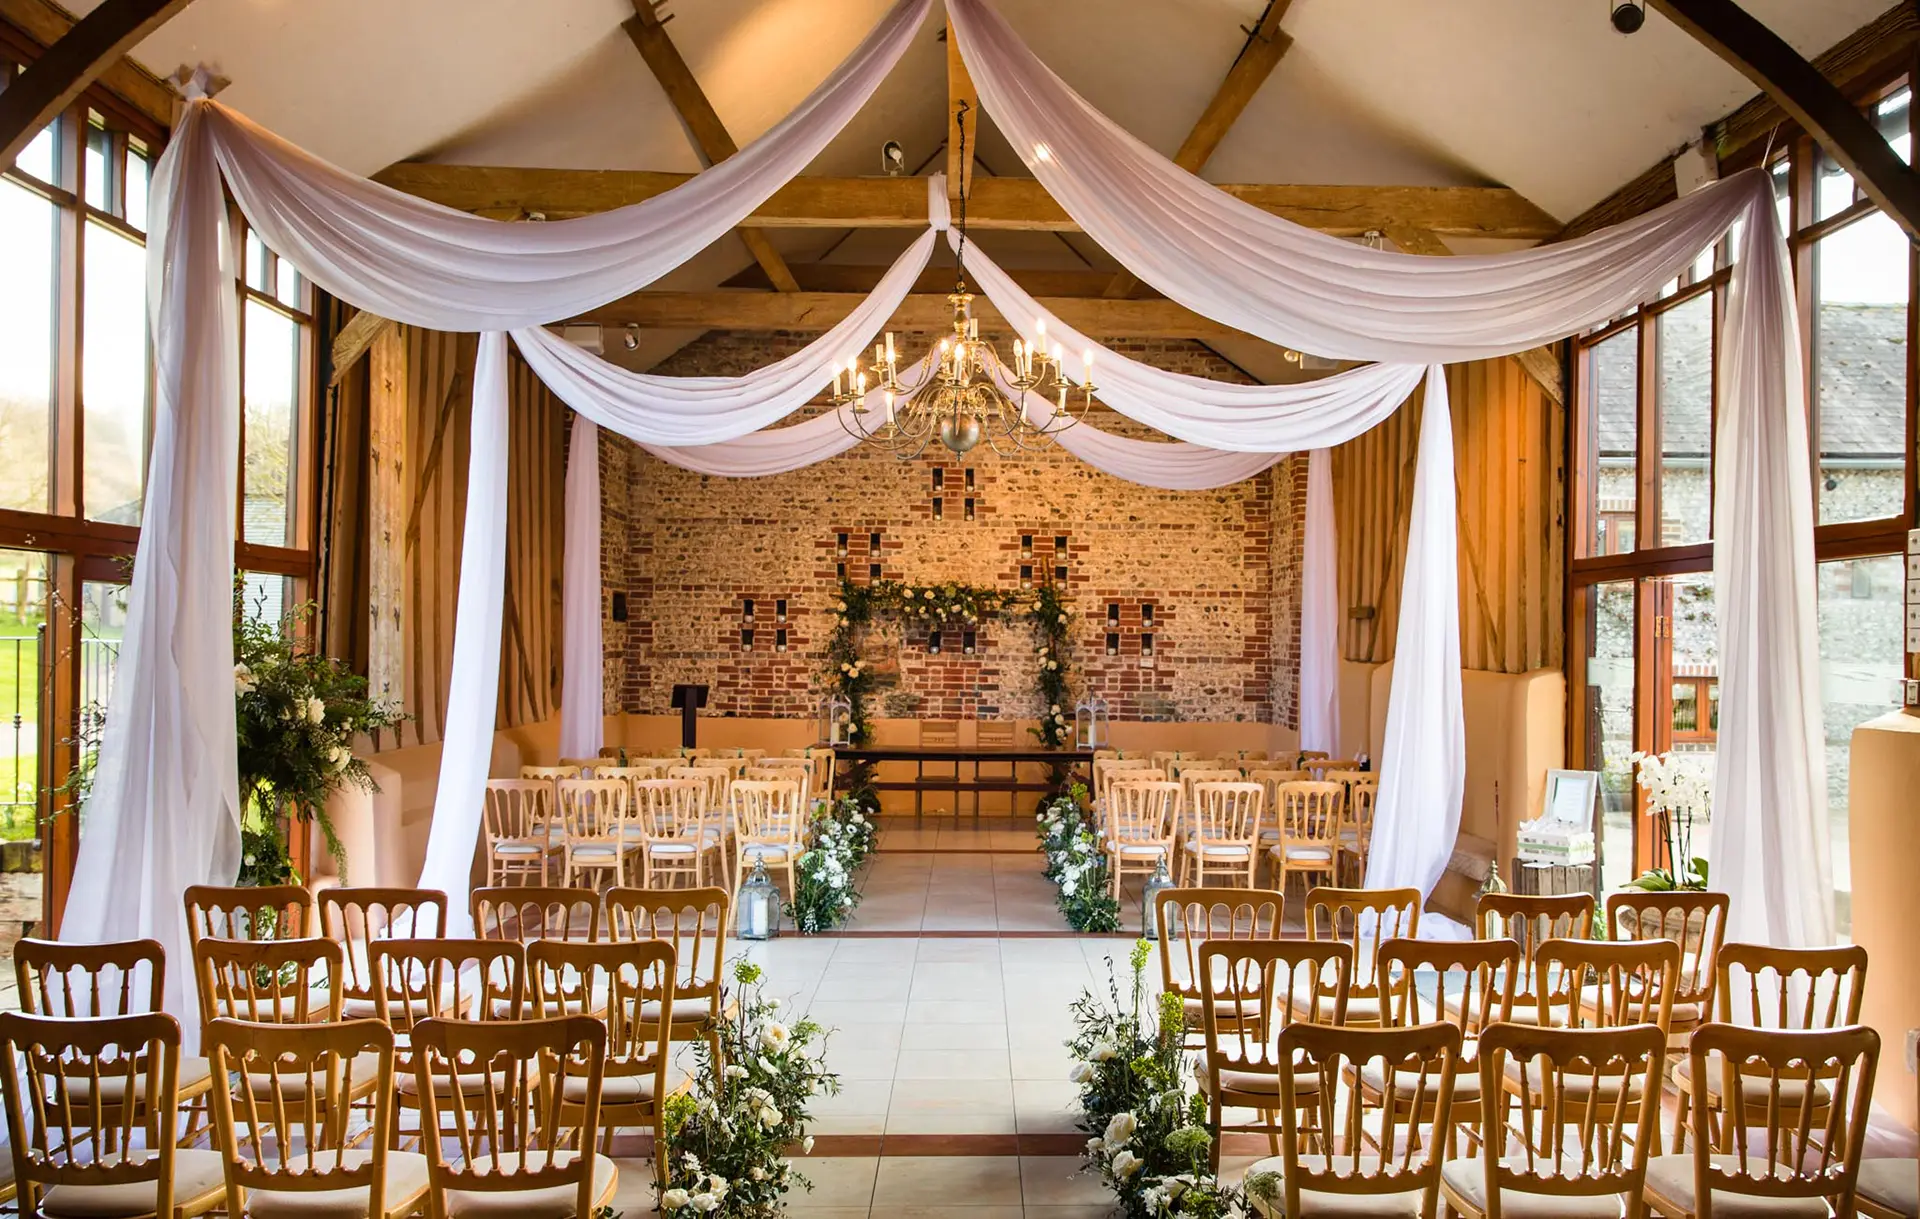 upwaltham barns wedding gallery ceremonies setup